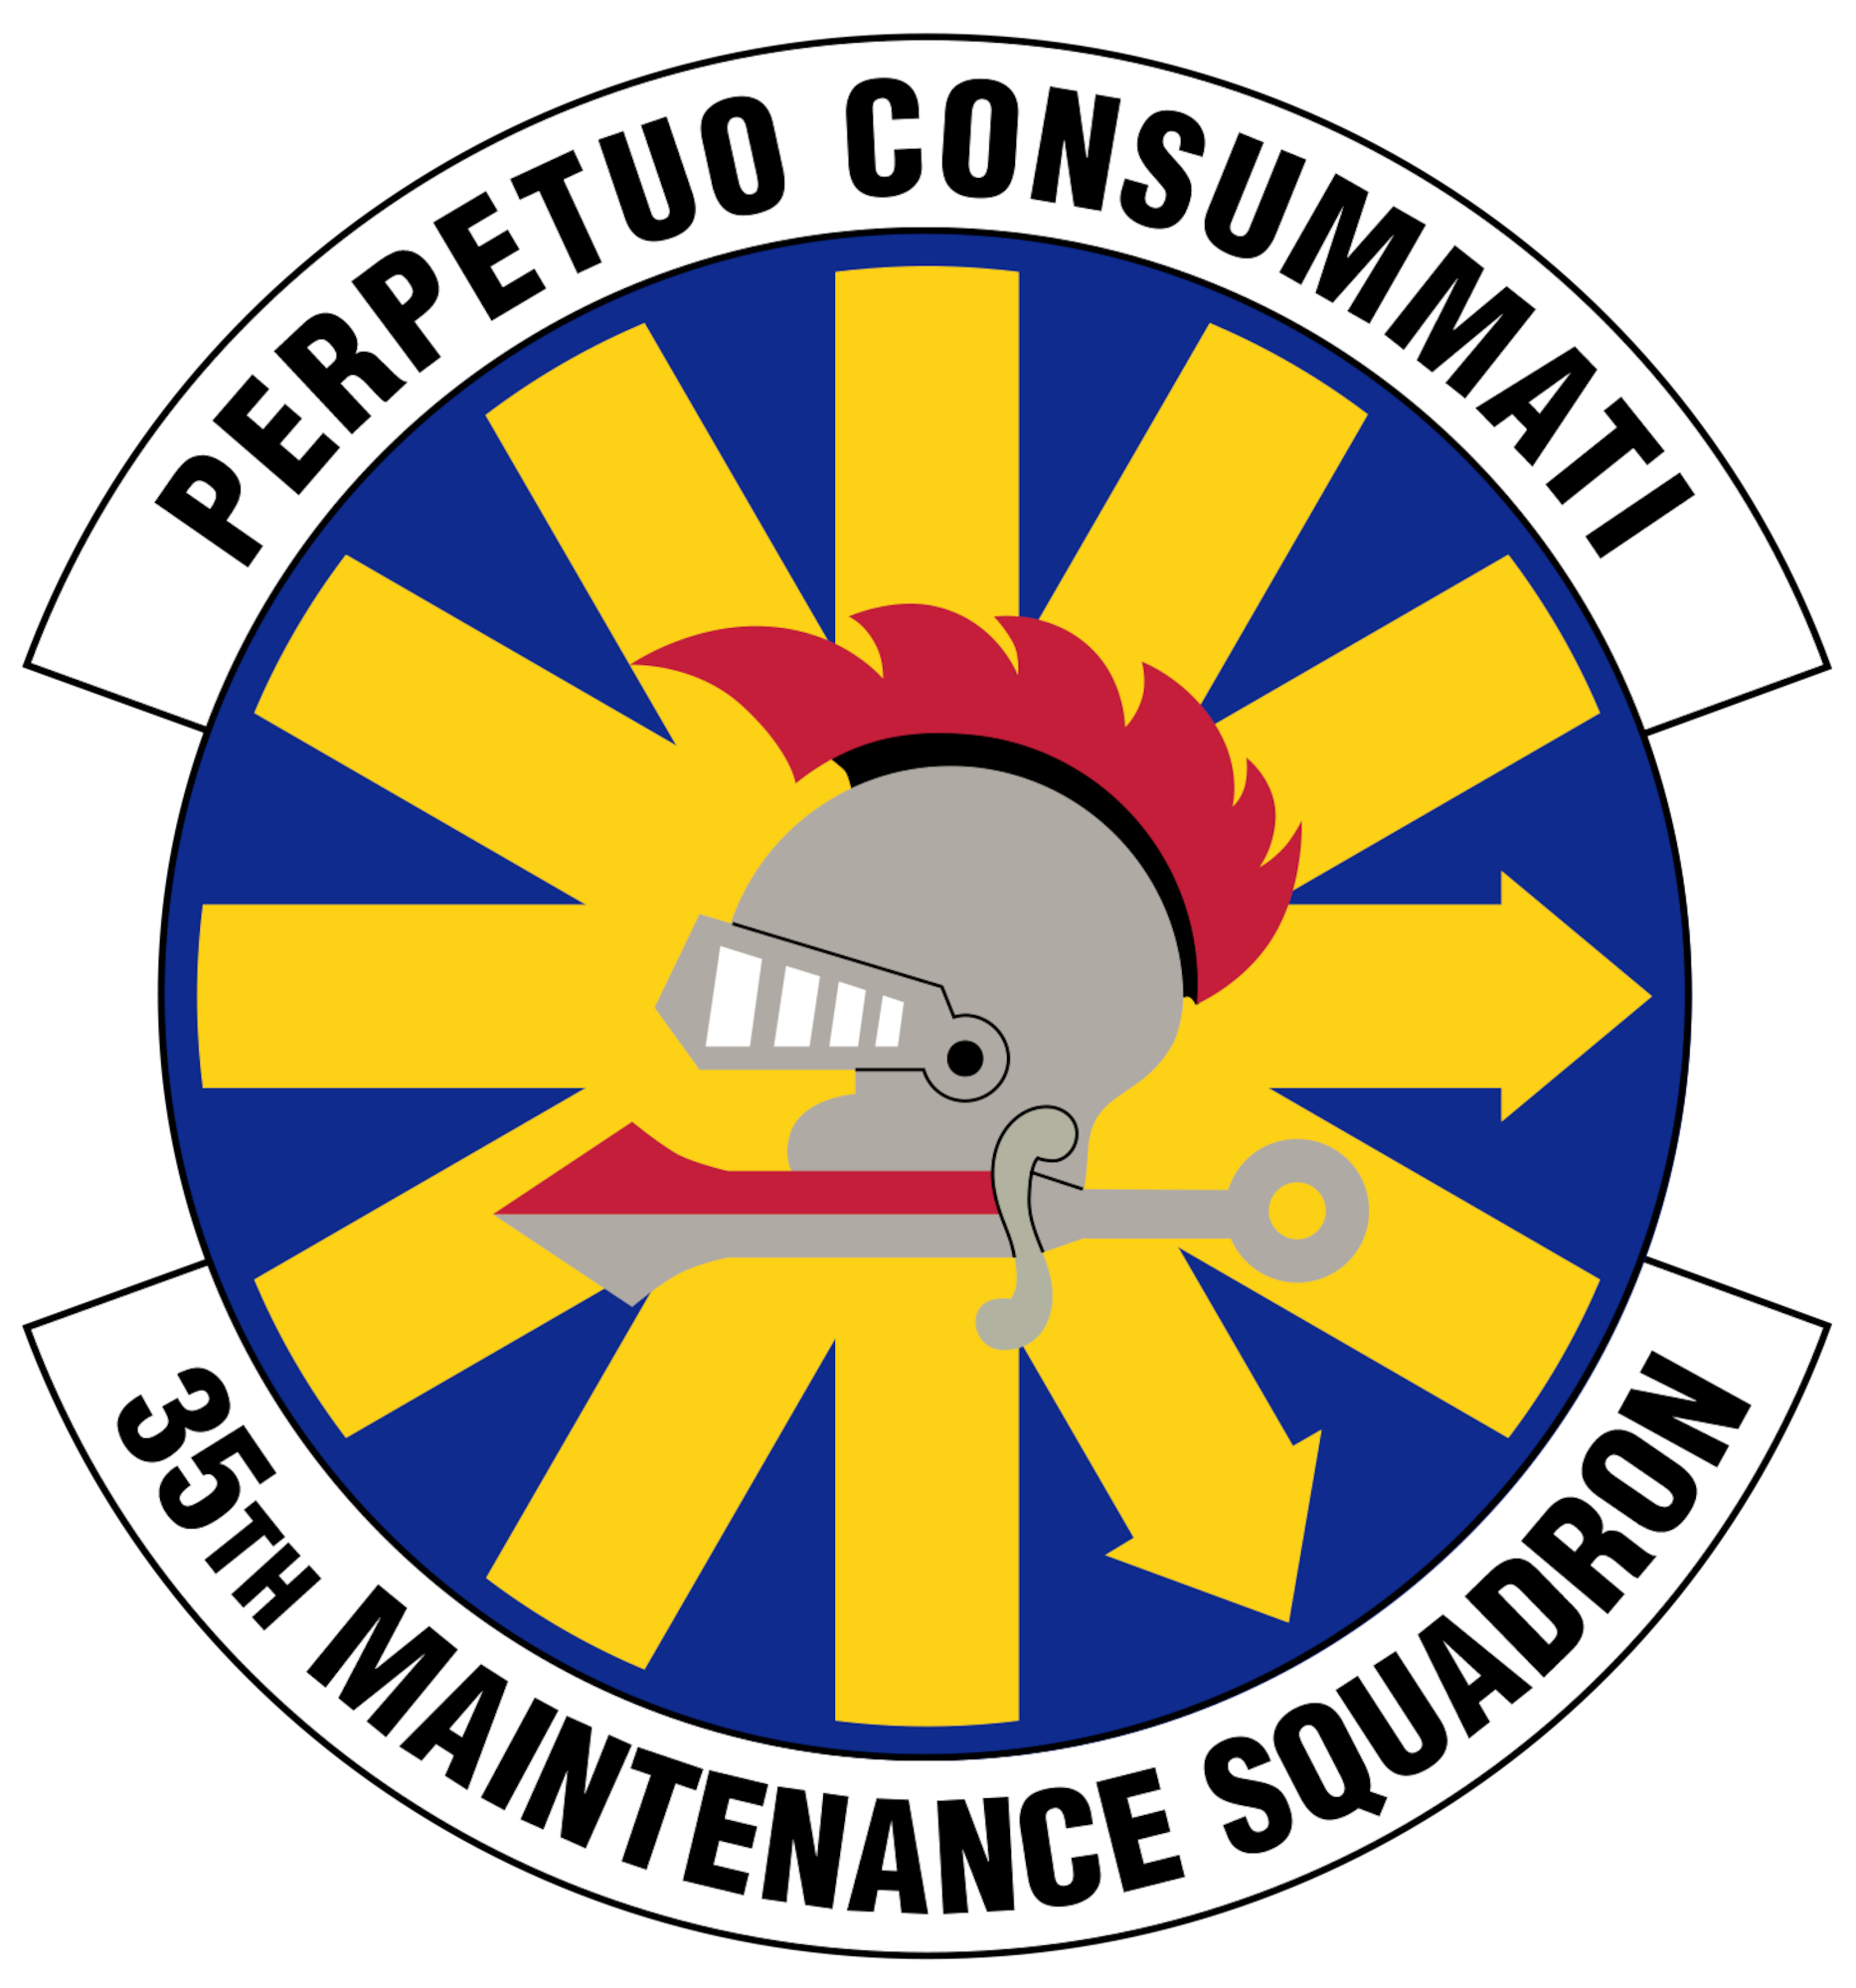 35th Maintenance Squadron